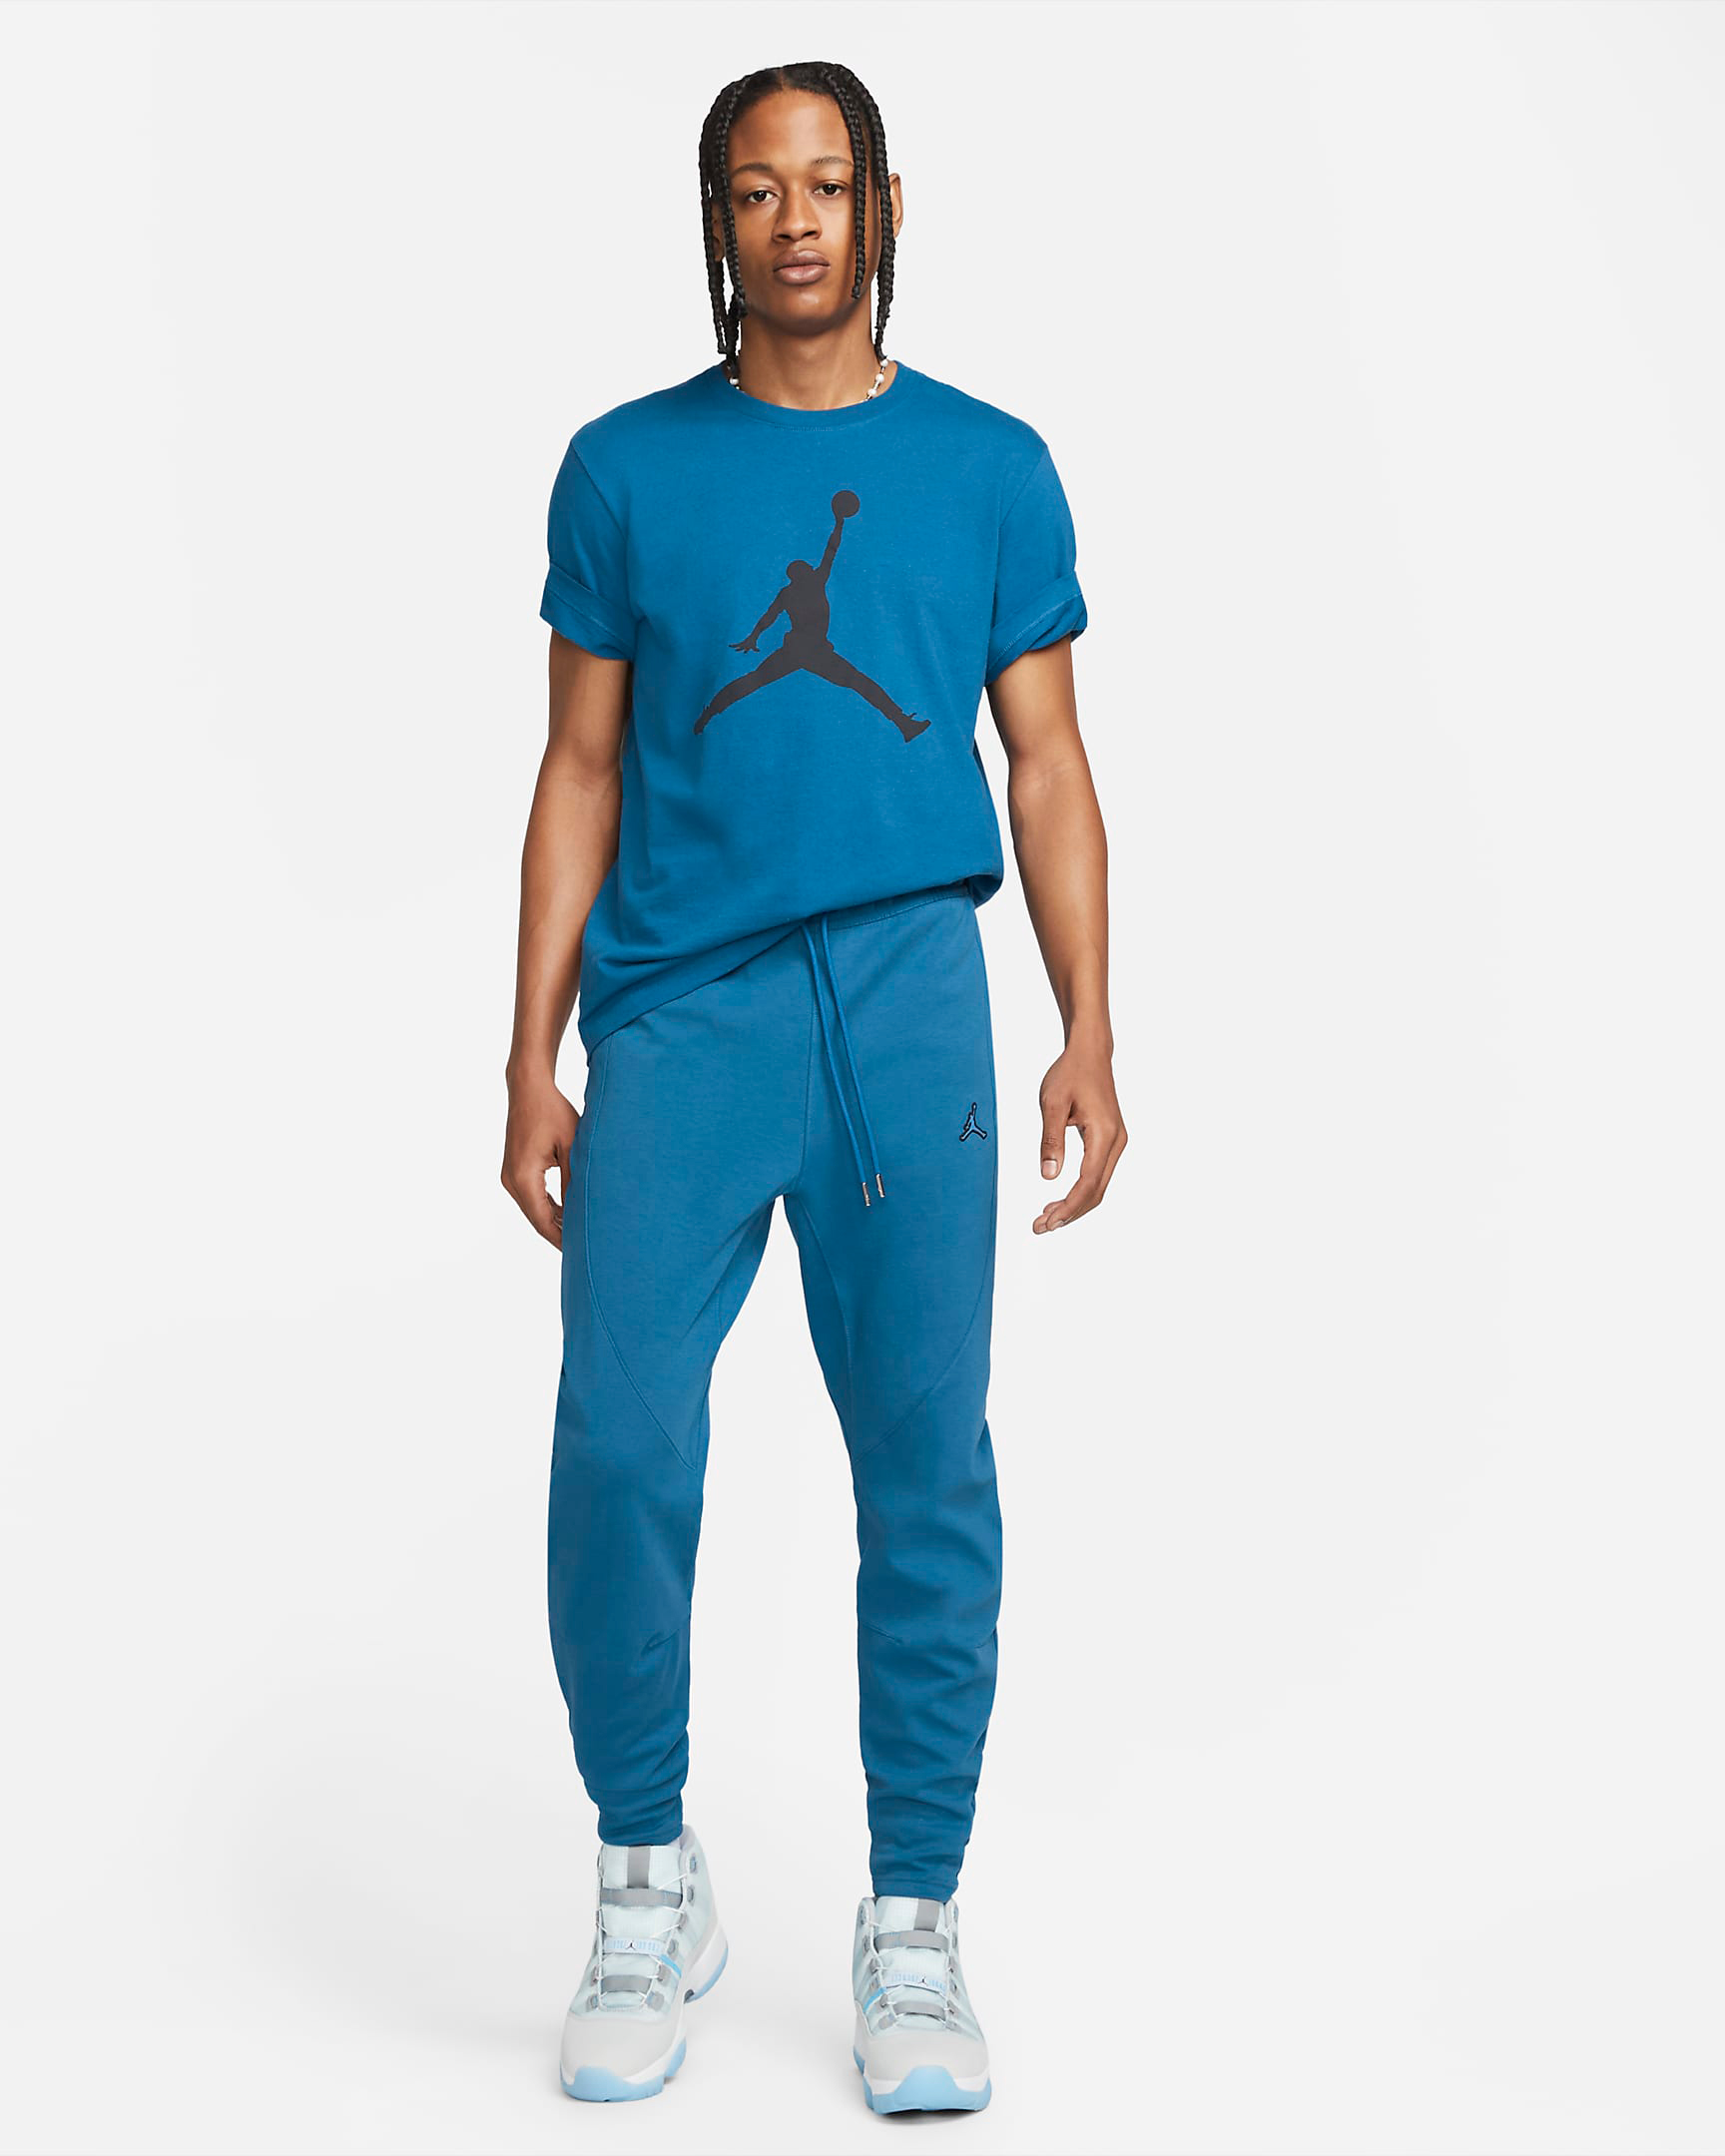 jordan-dark-marina-blue-shirt-and-pants